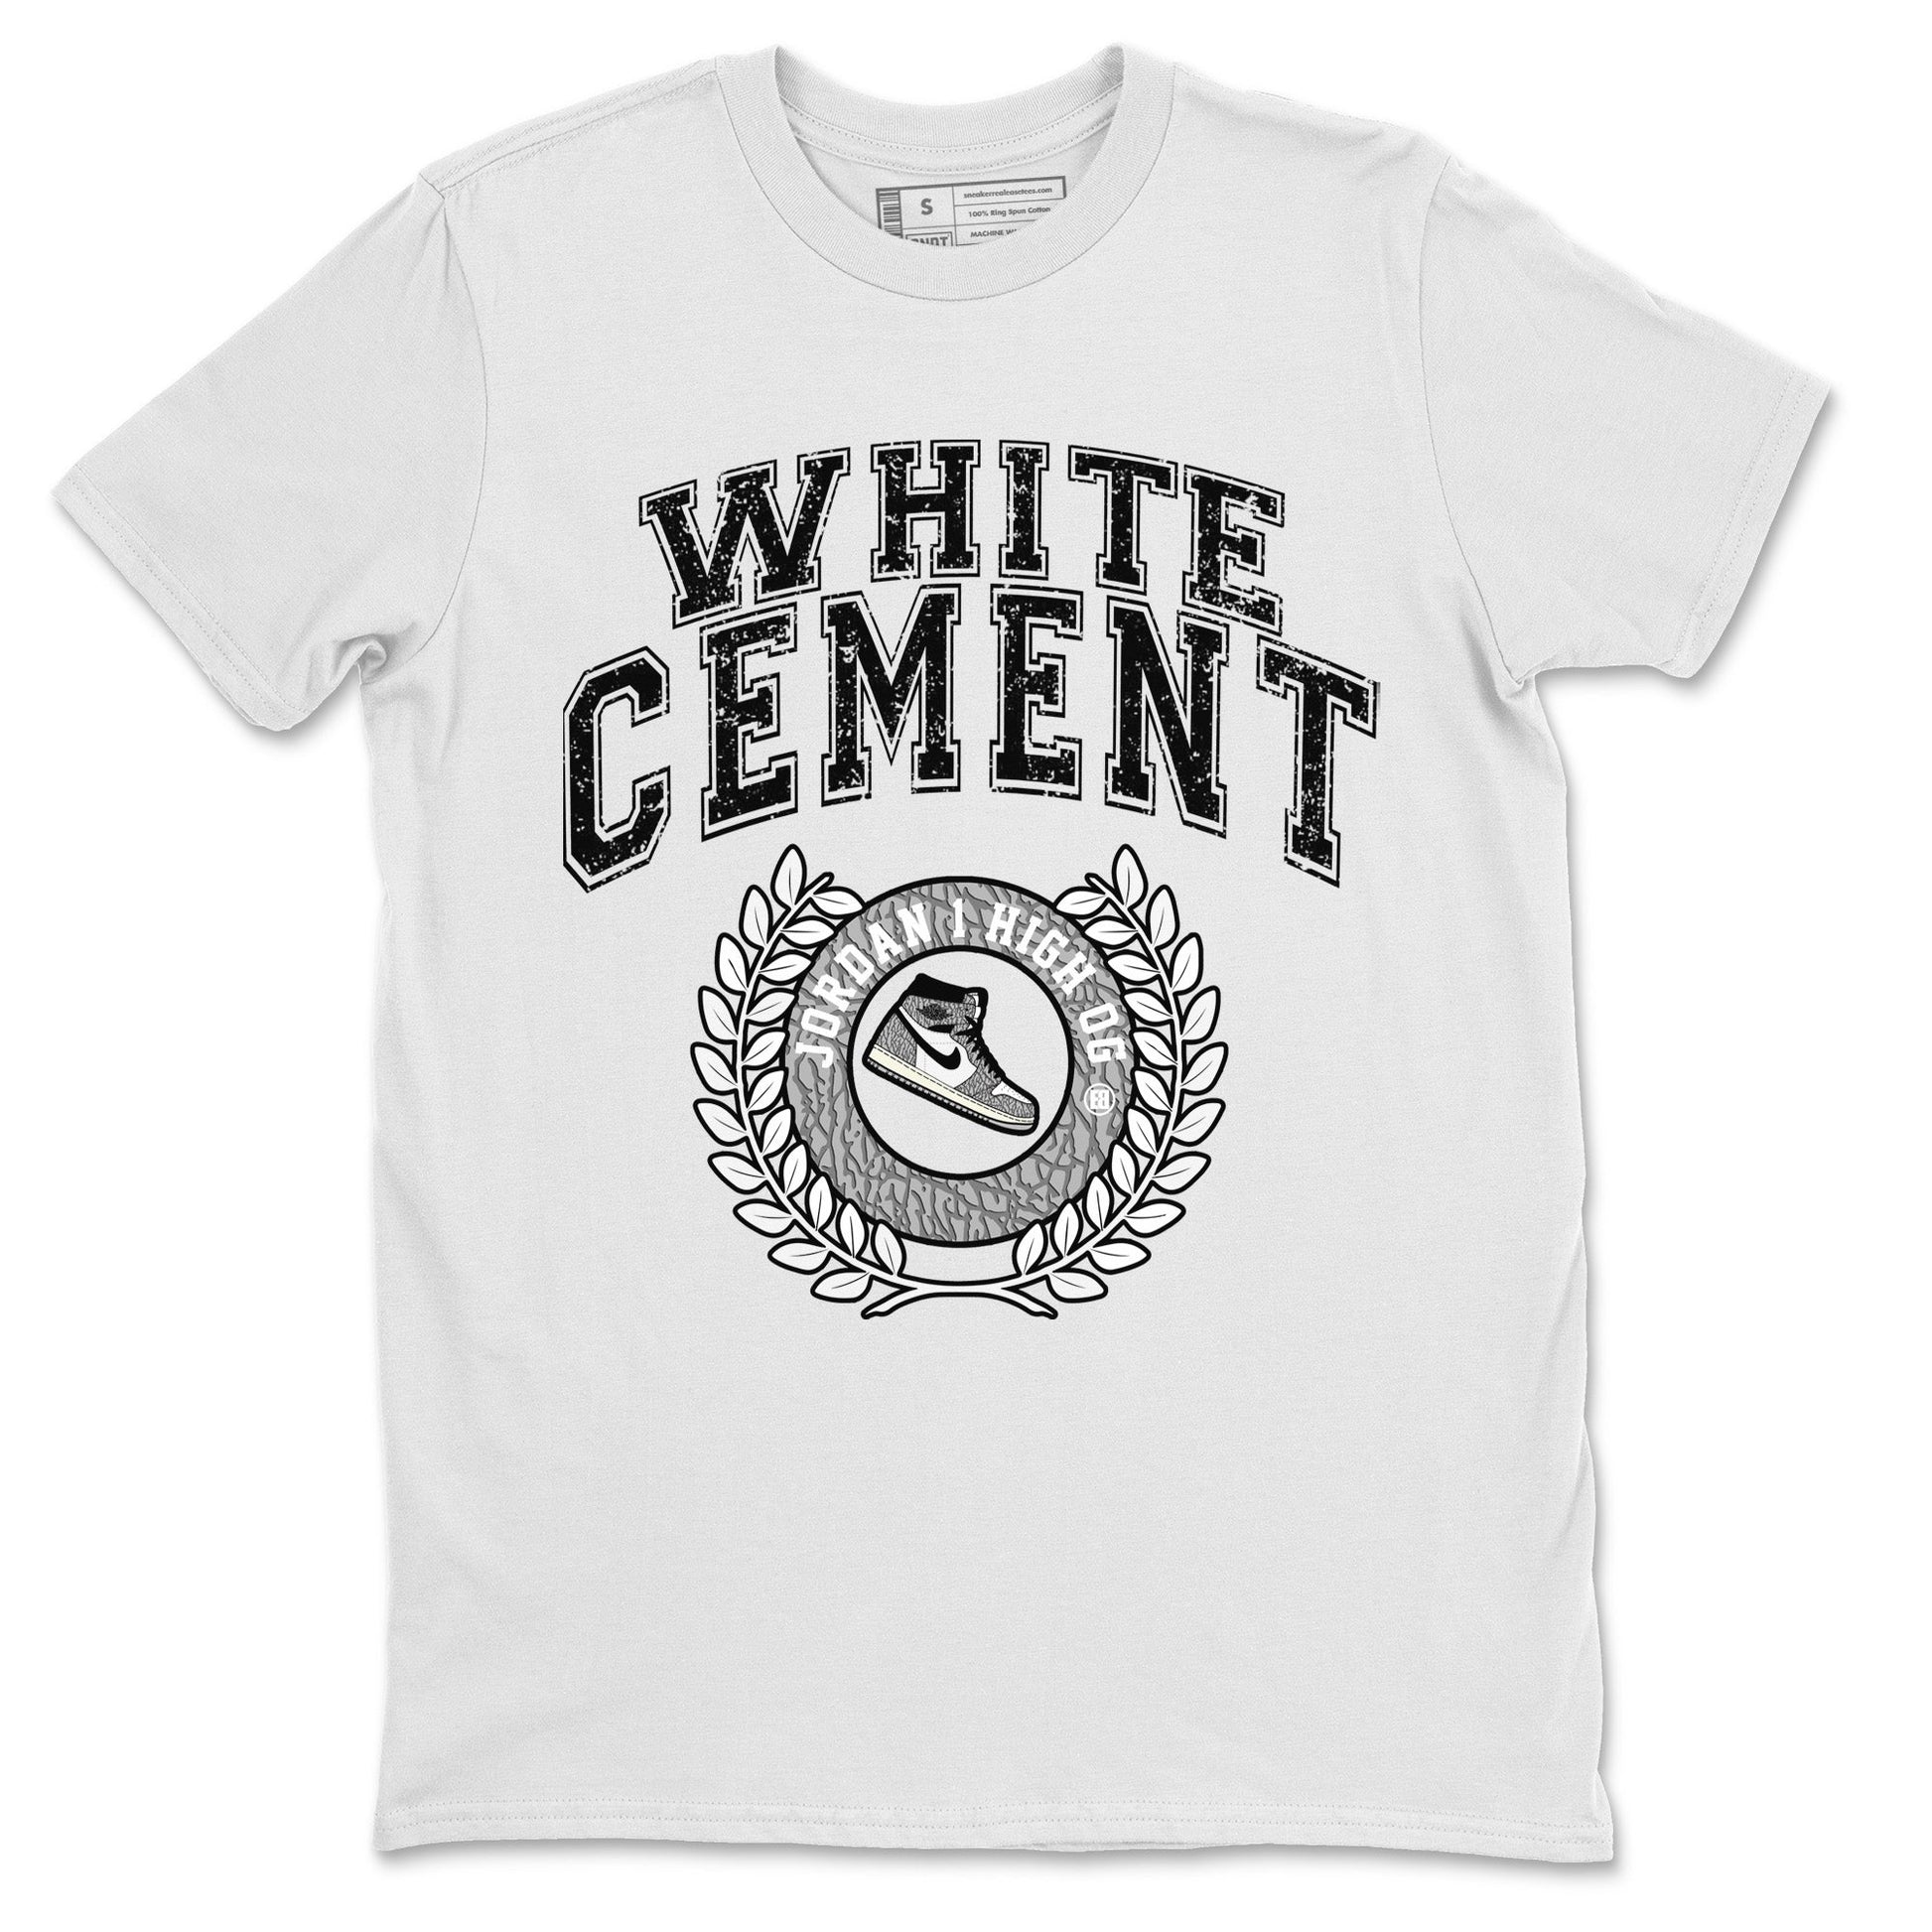 Jordan 1 White Cement Sneaker Match Tees Sneaker Letter Sneaker Tees Jordan 1 White Cement Sneaker Release Tees Unisex Shirts